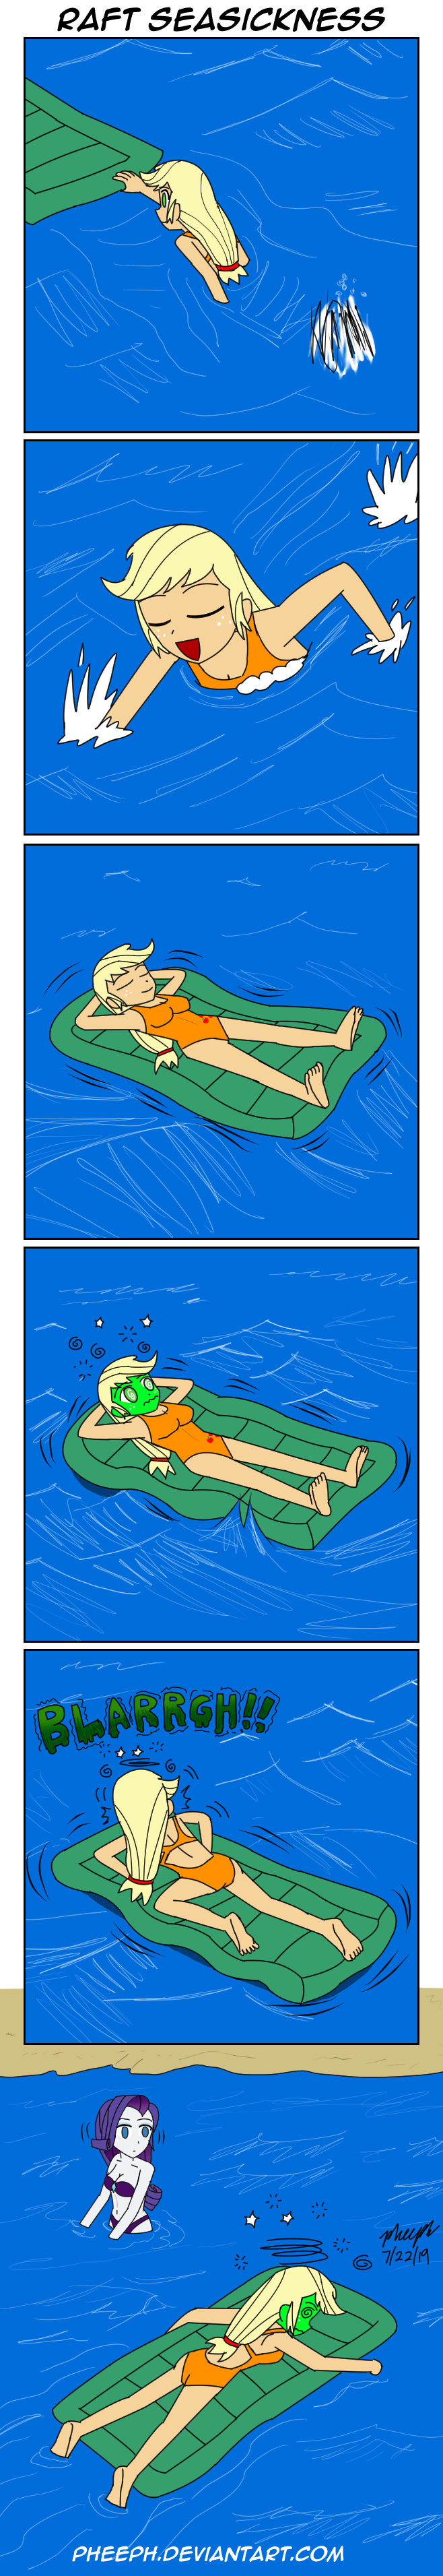 Page 59 - Raft Seasickness